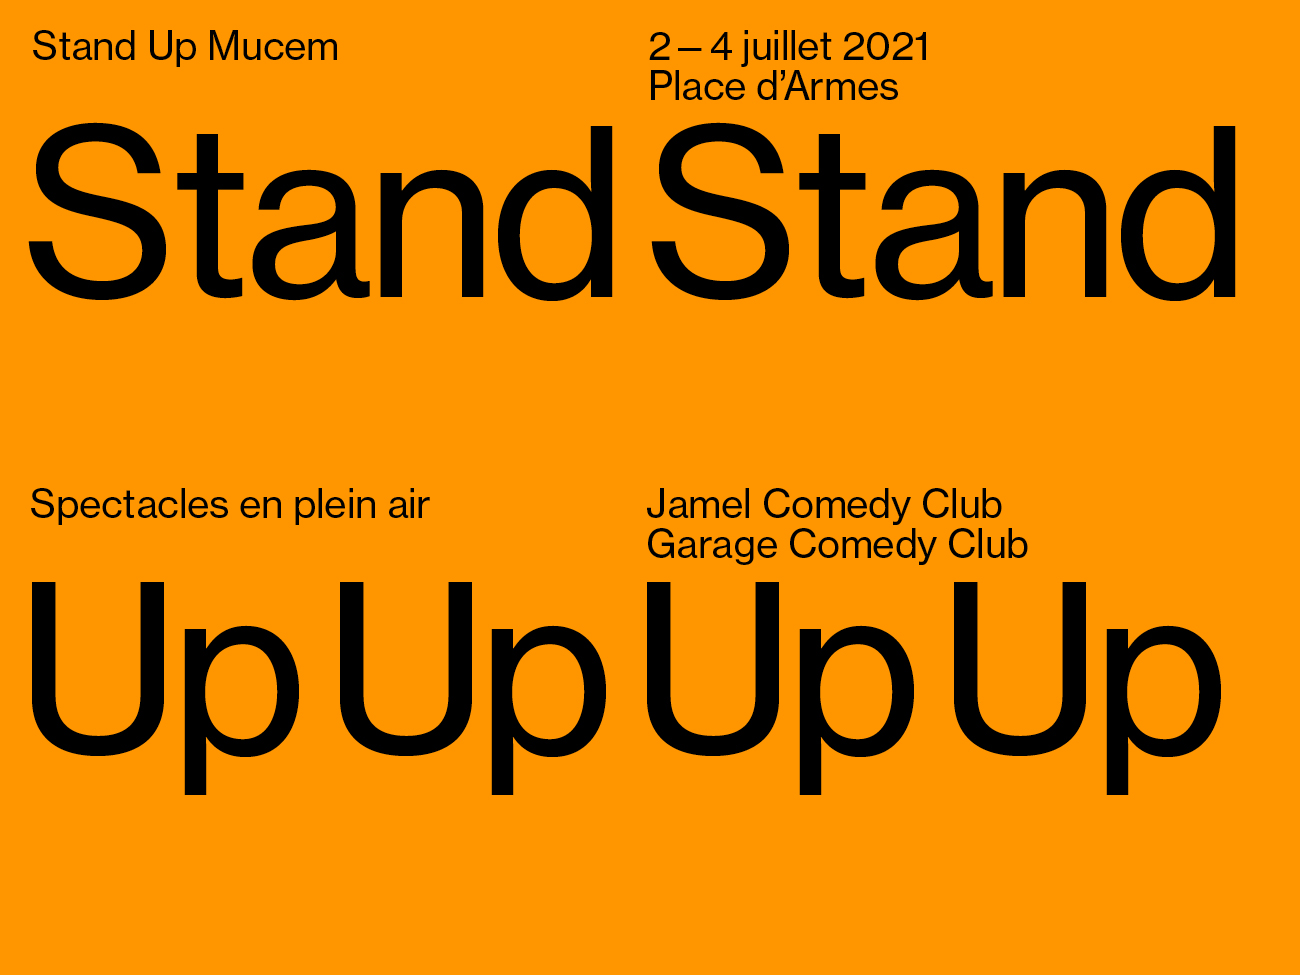 Stand Up © Spassky, Mucem